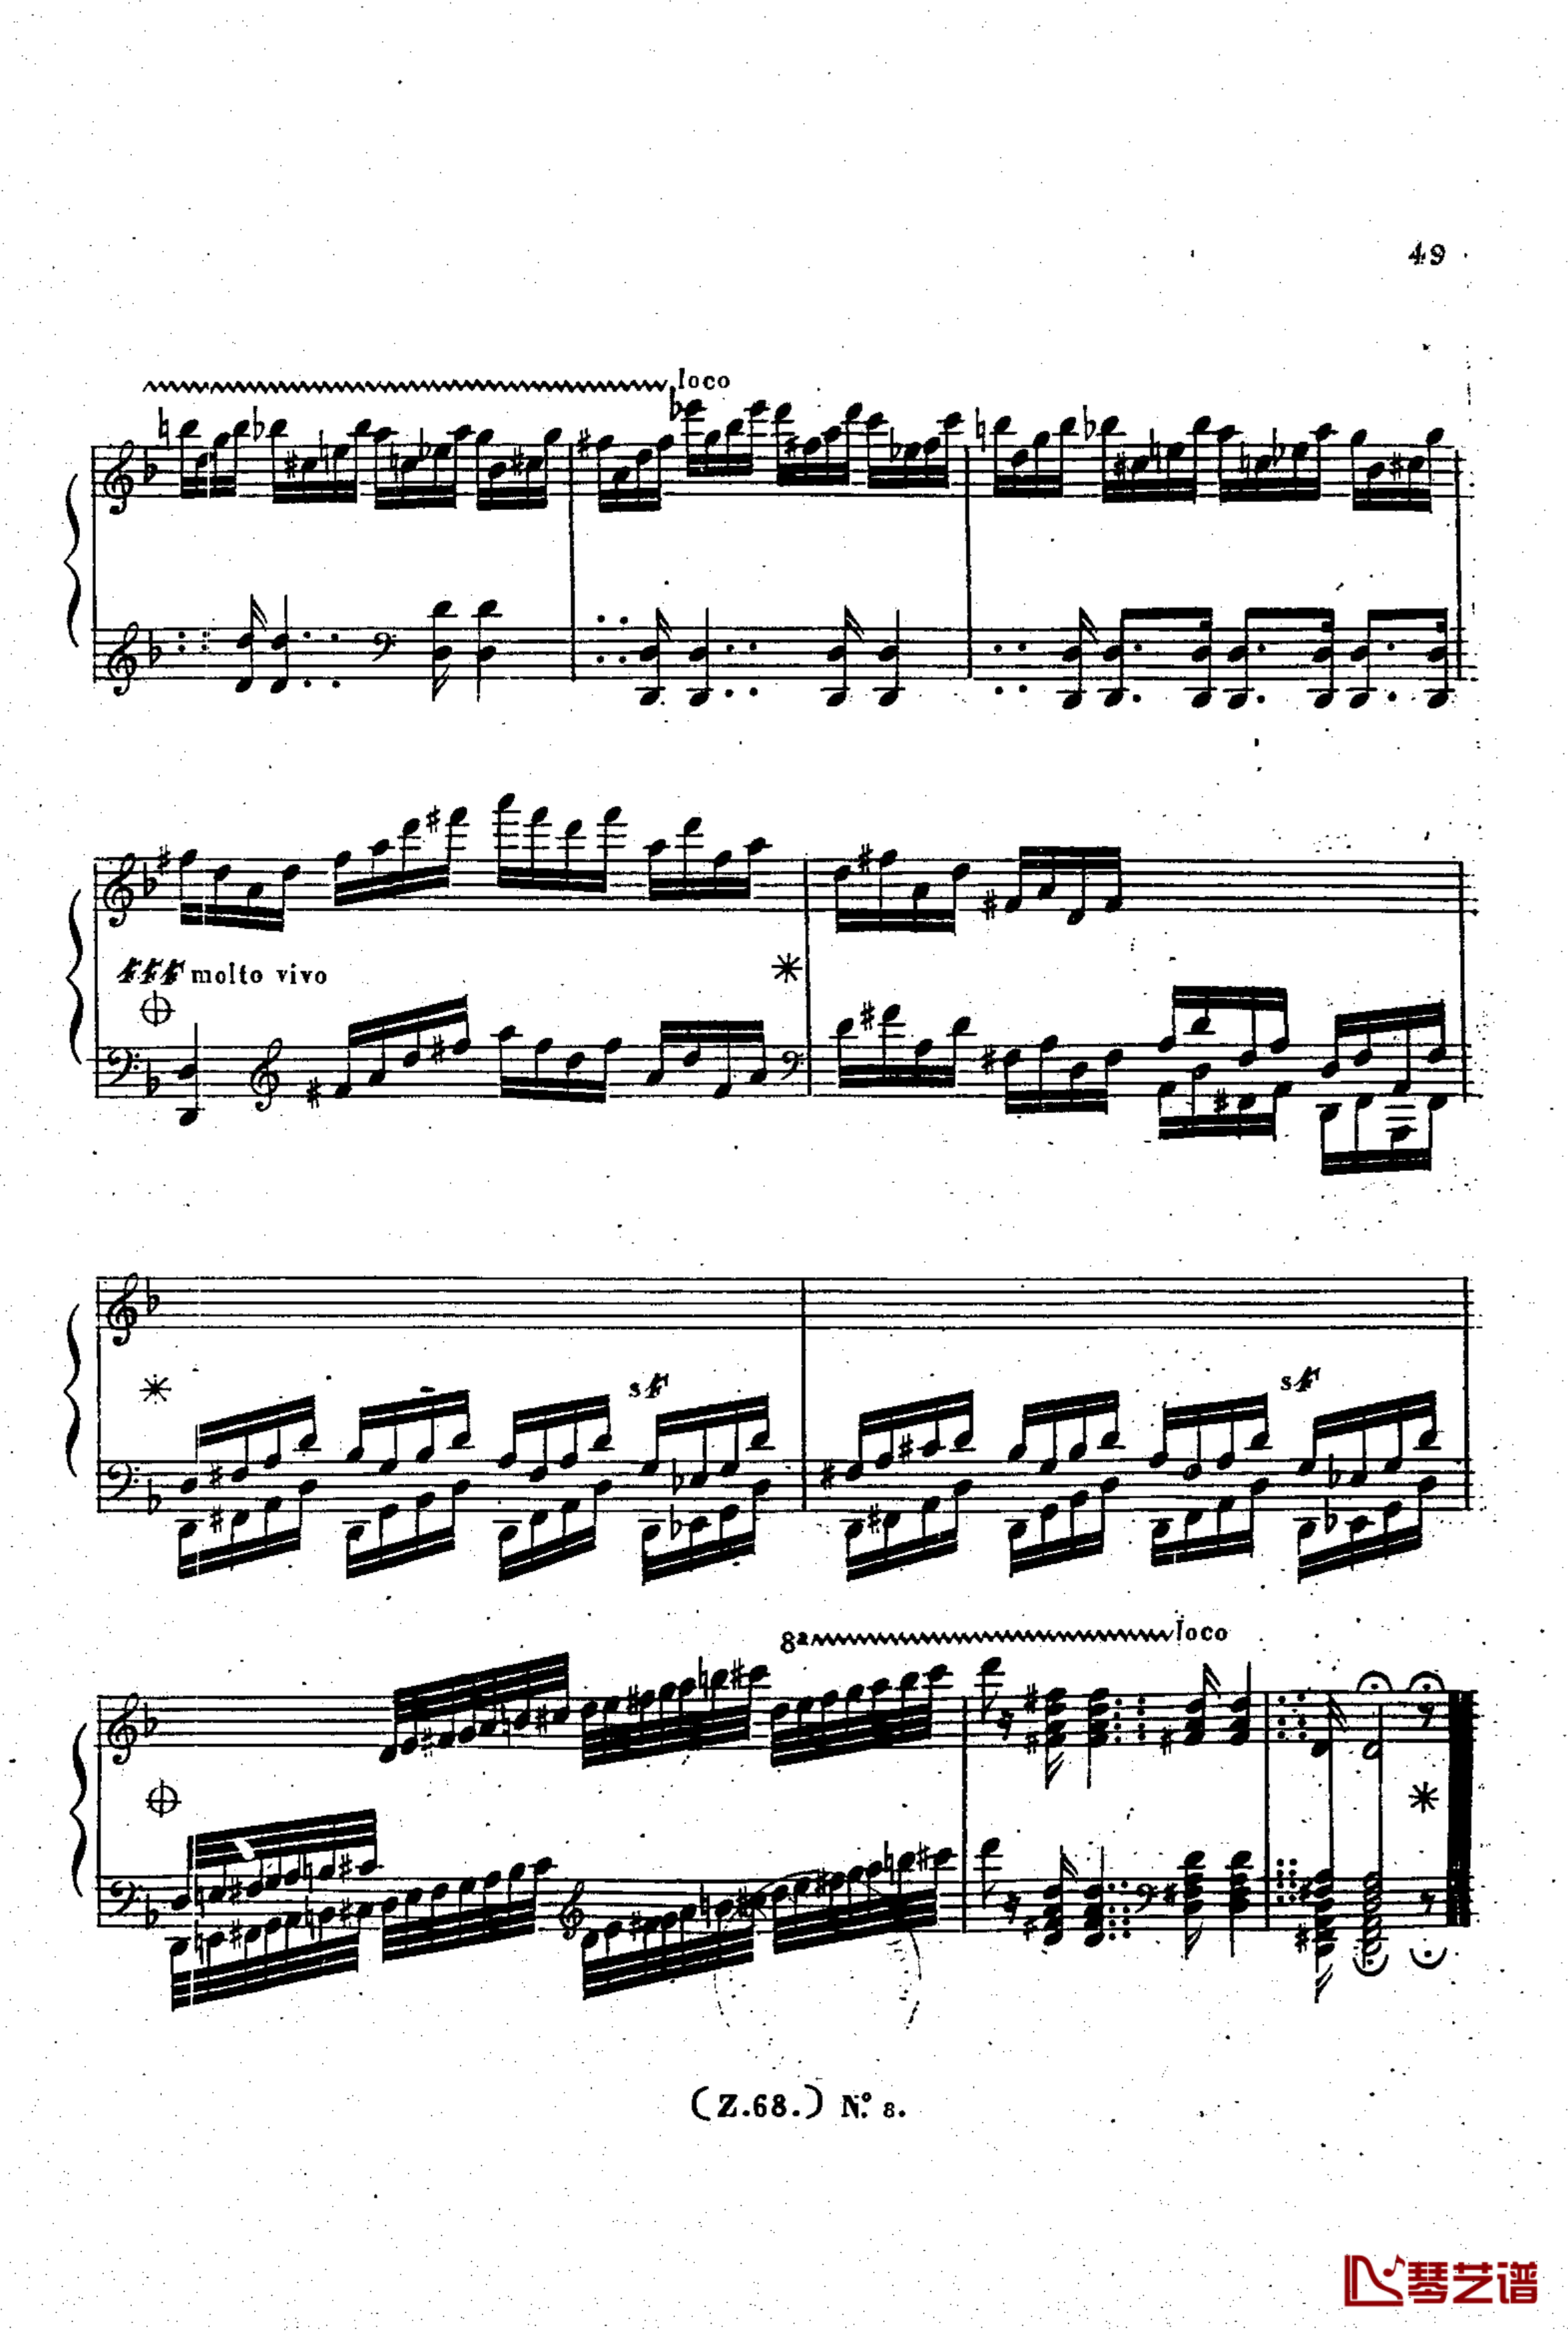  d小调第六钢琴奏鸣曲 Op.124钢琴谱-车尔尼-Czerny50